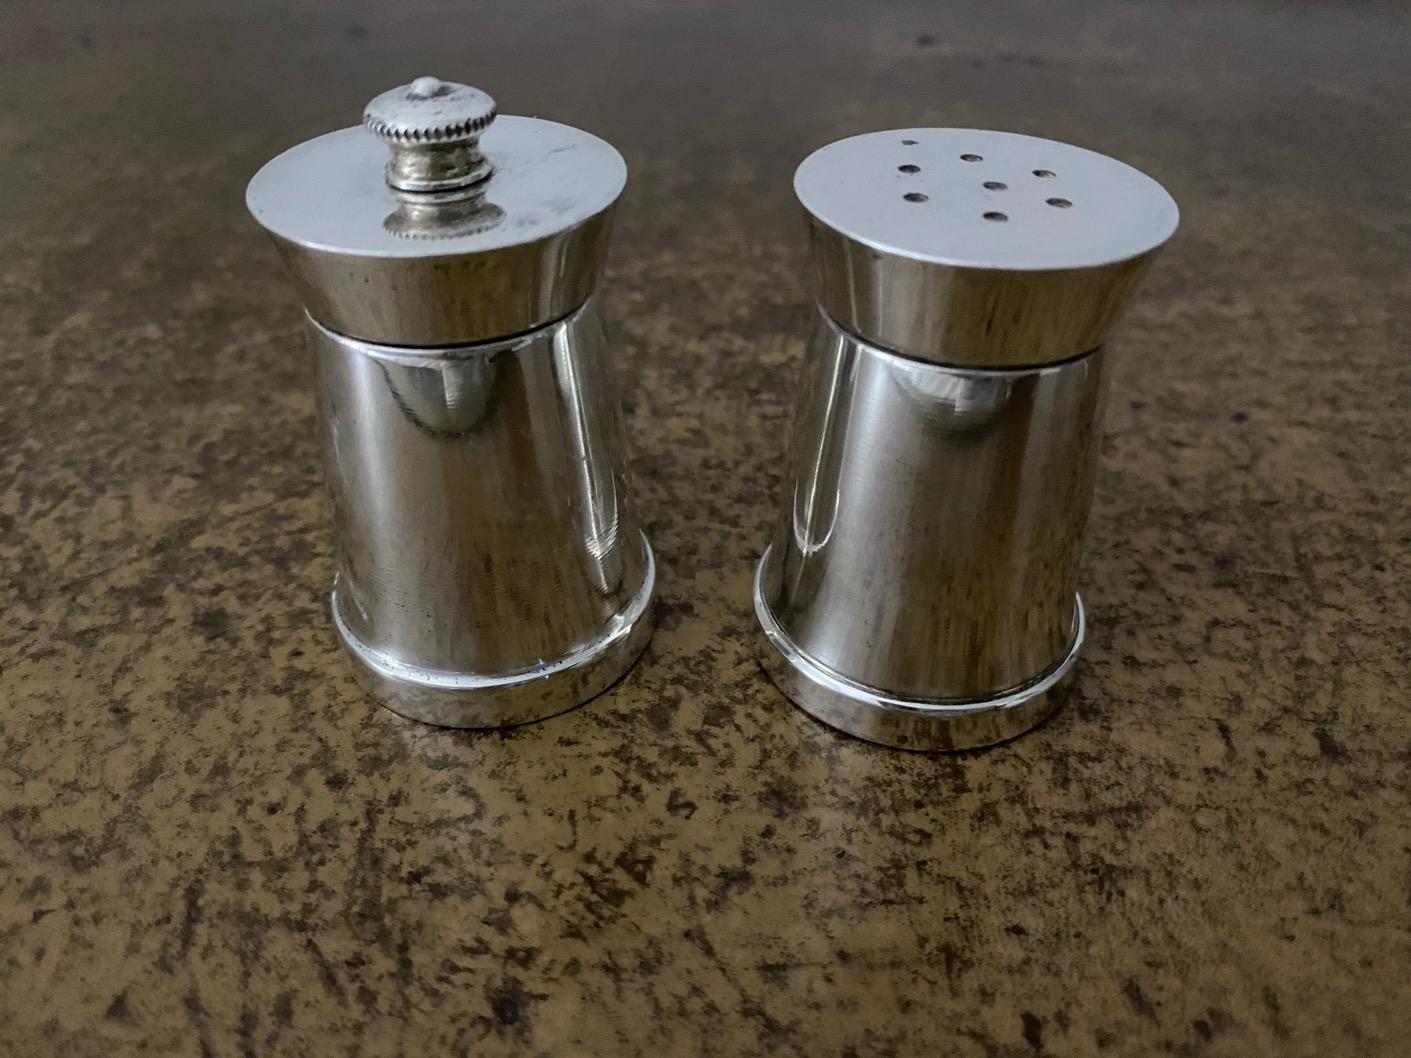 Faneuil by Tiffany & Co. sterling silver salt shaker and pepper mill set. Simple elegance,
Salt shaker 1.5